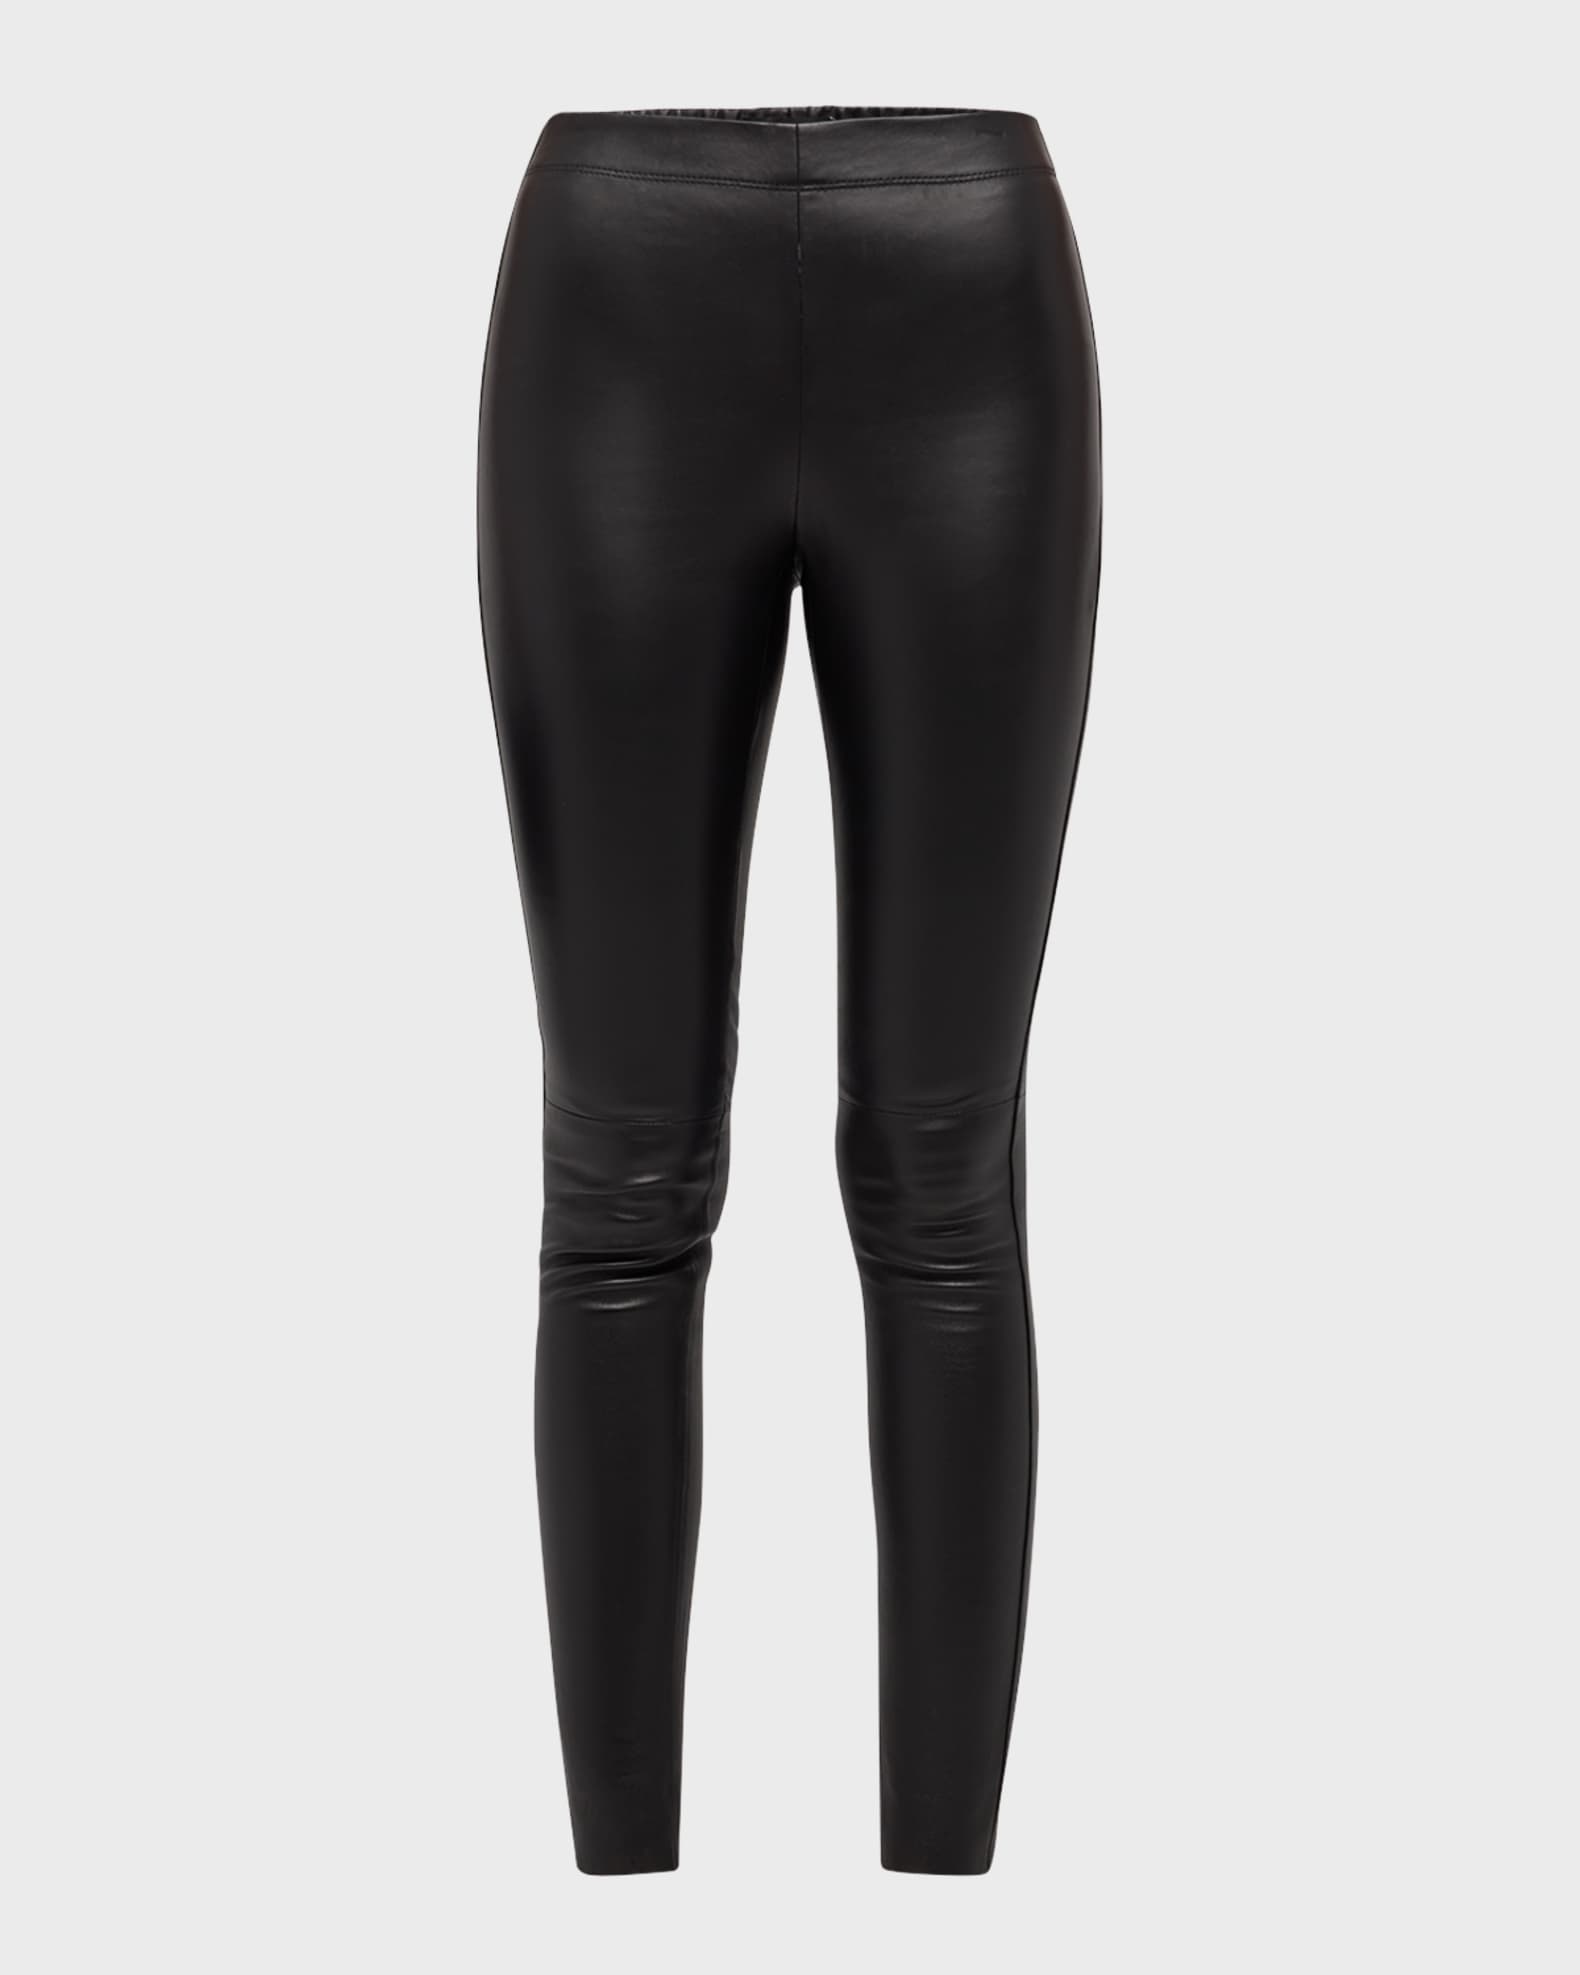 NEW Helmut Lang Stretch Leather Leggings/Pants Black - Authentic